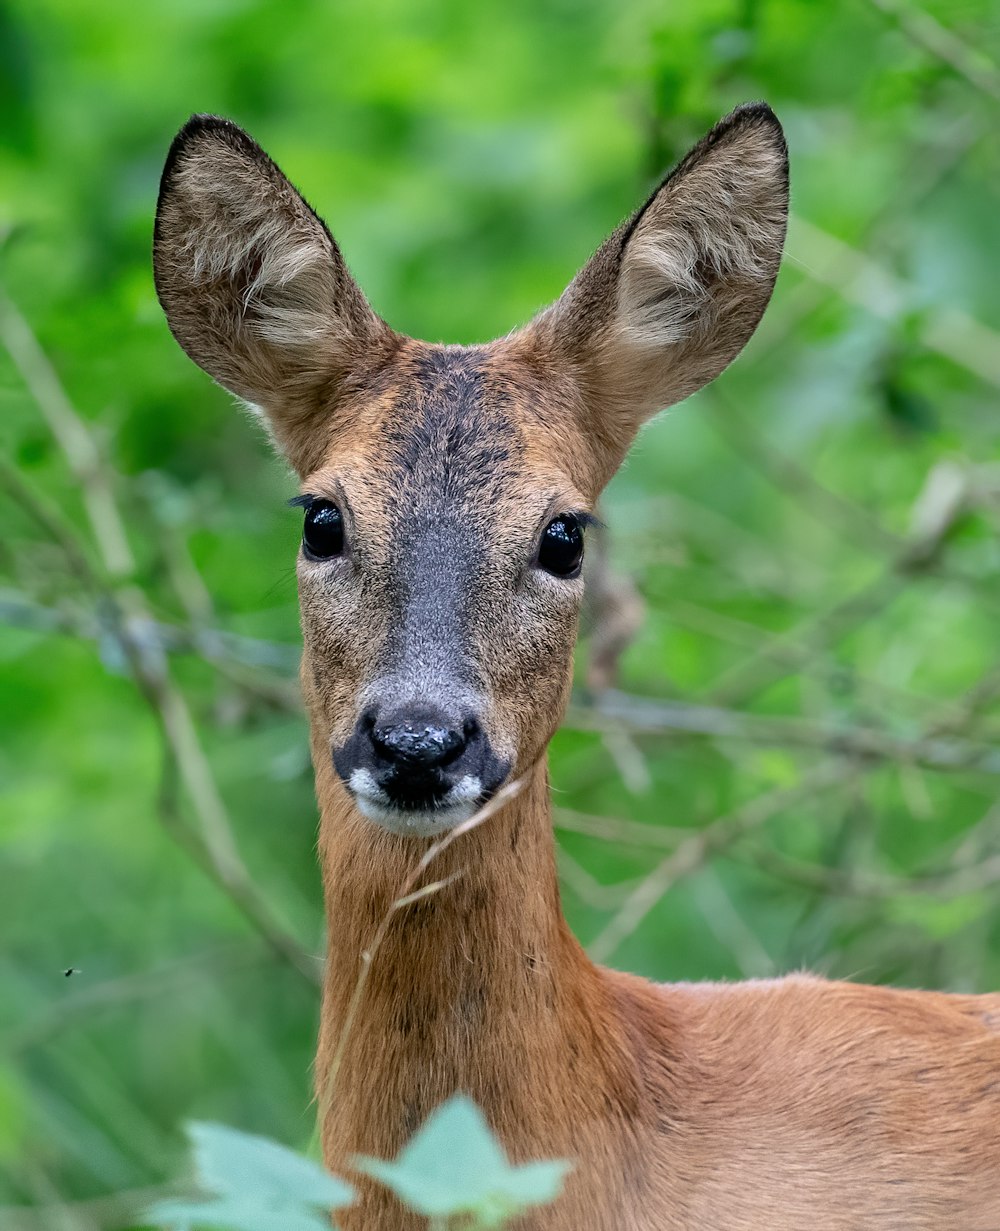 brown deer in green grass during daytime